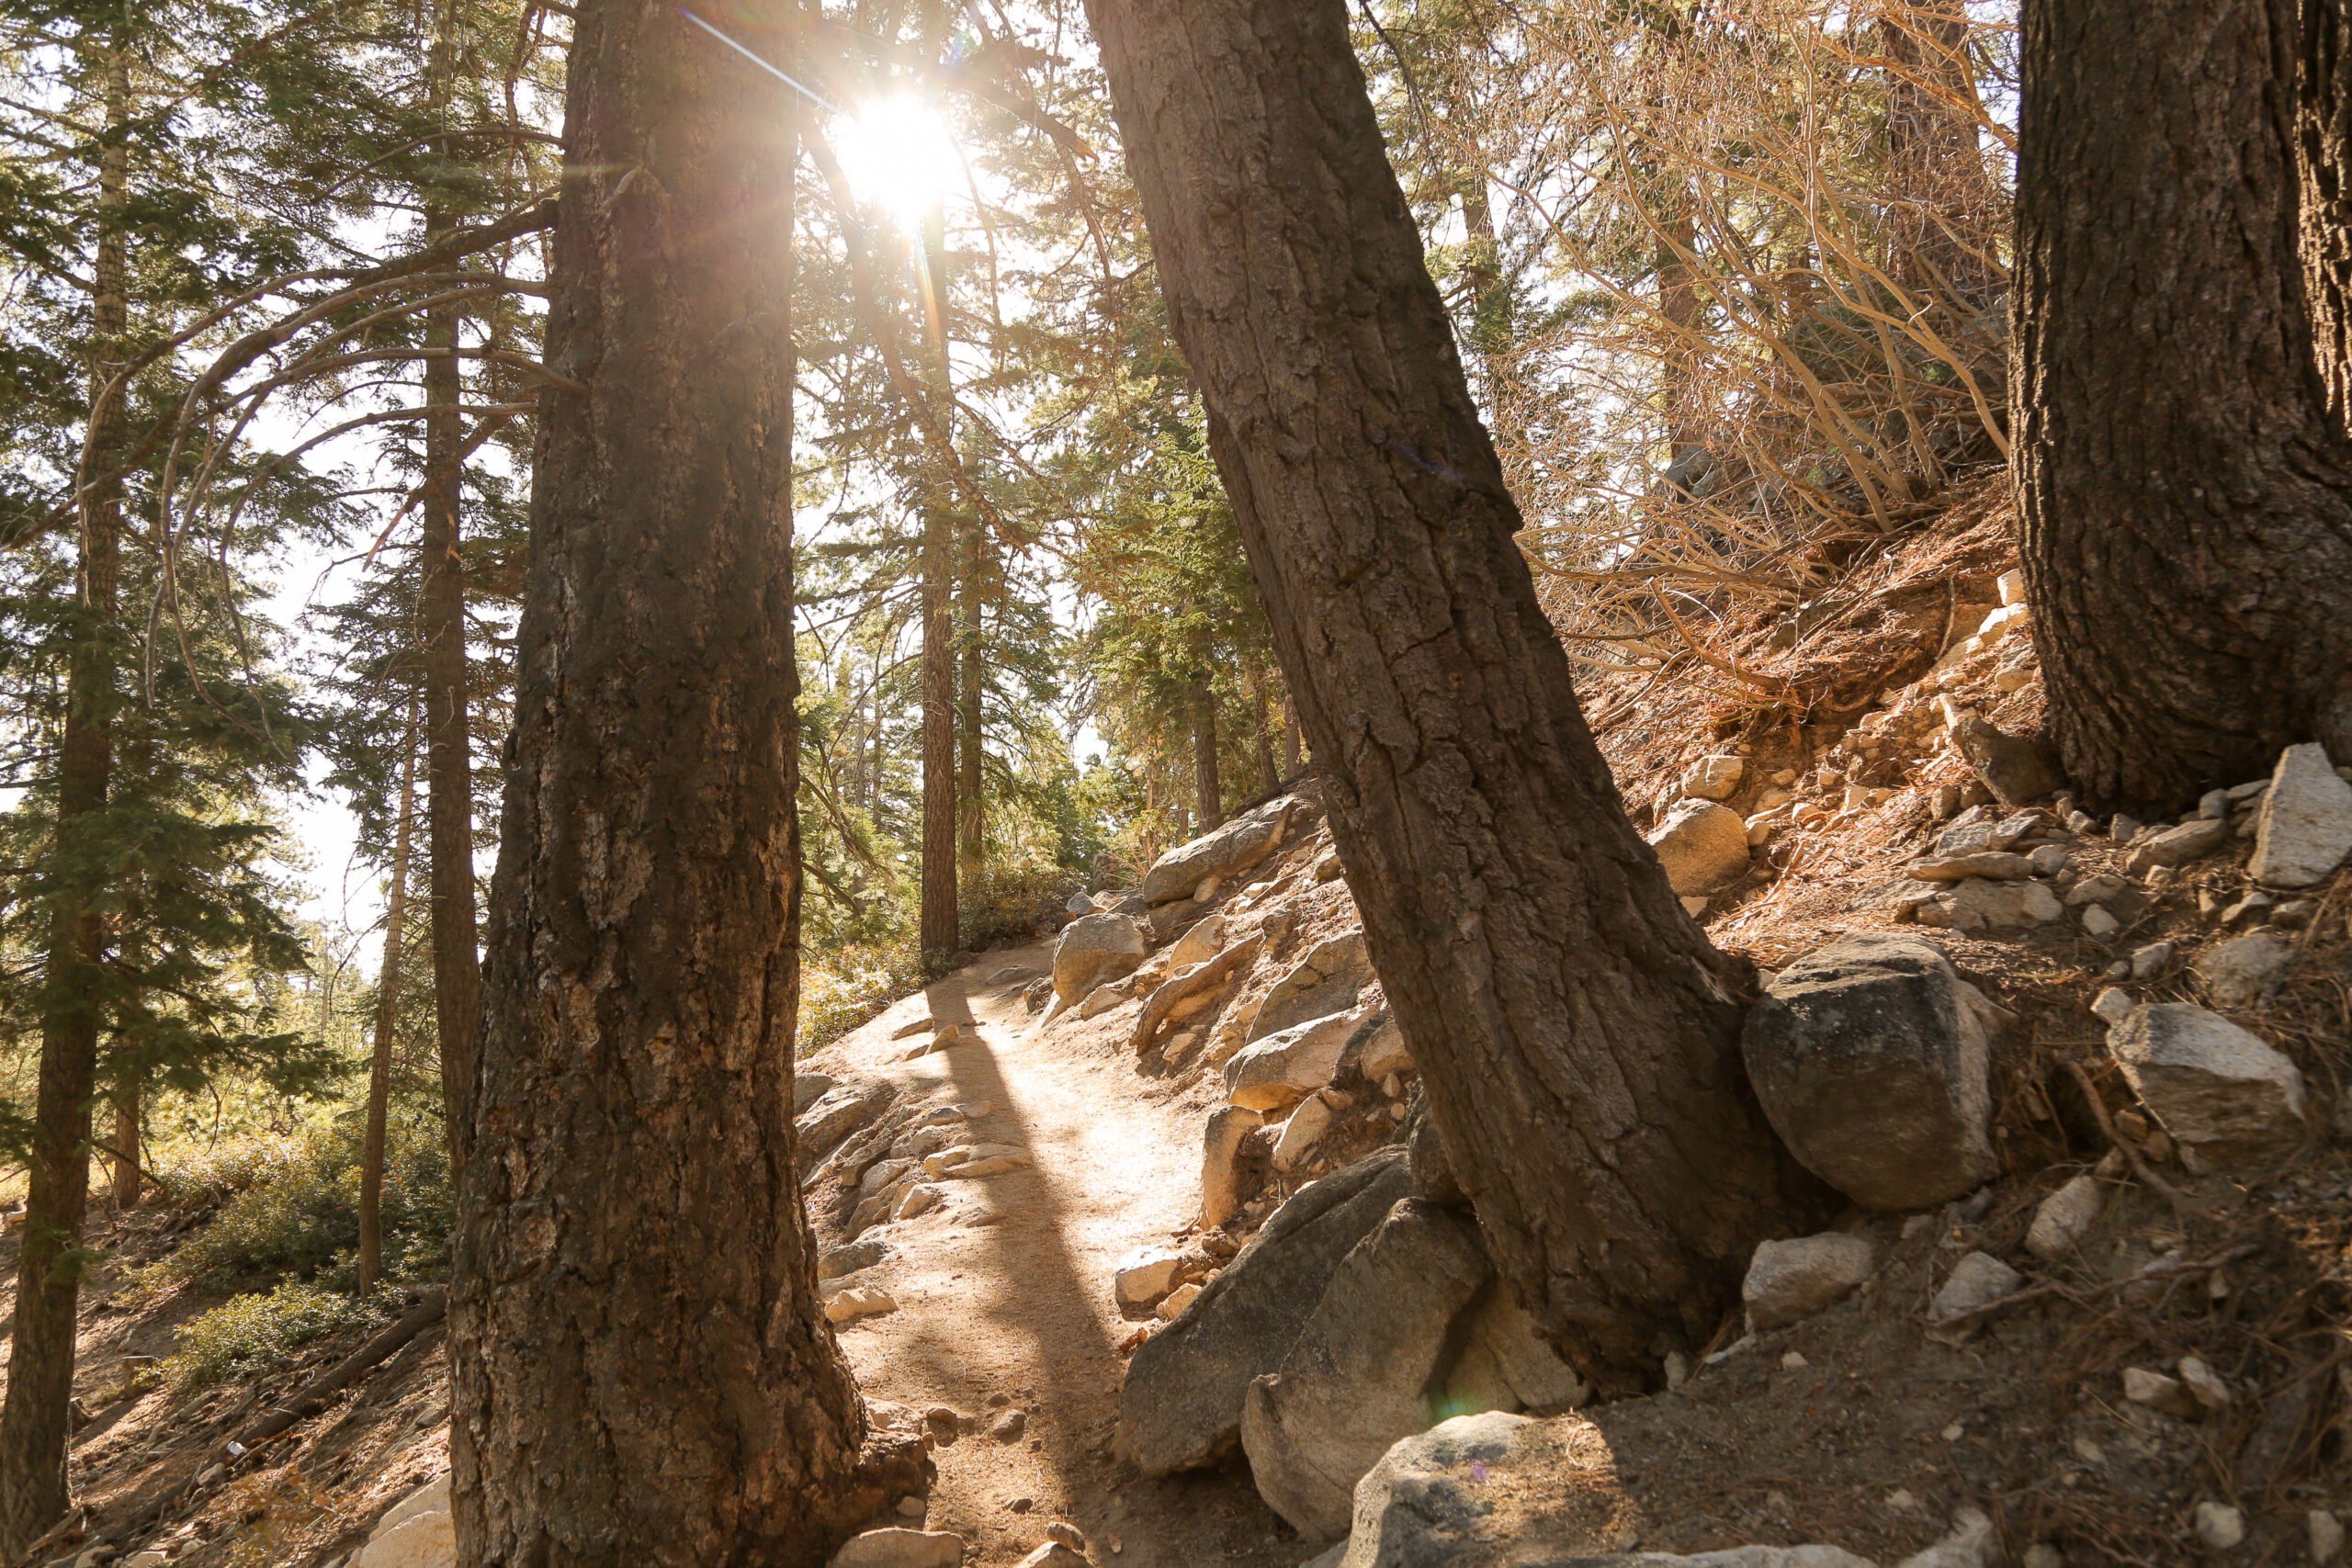 Castle Rock Trail through forested area near Lake Arrowhead, California.